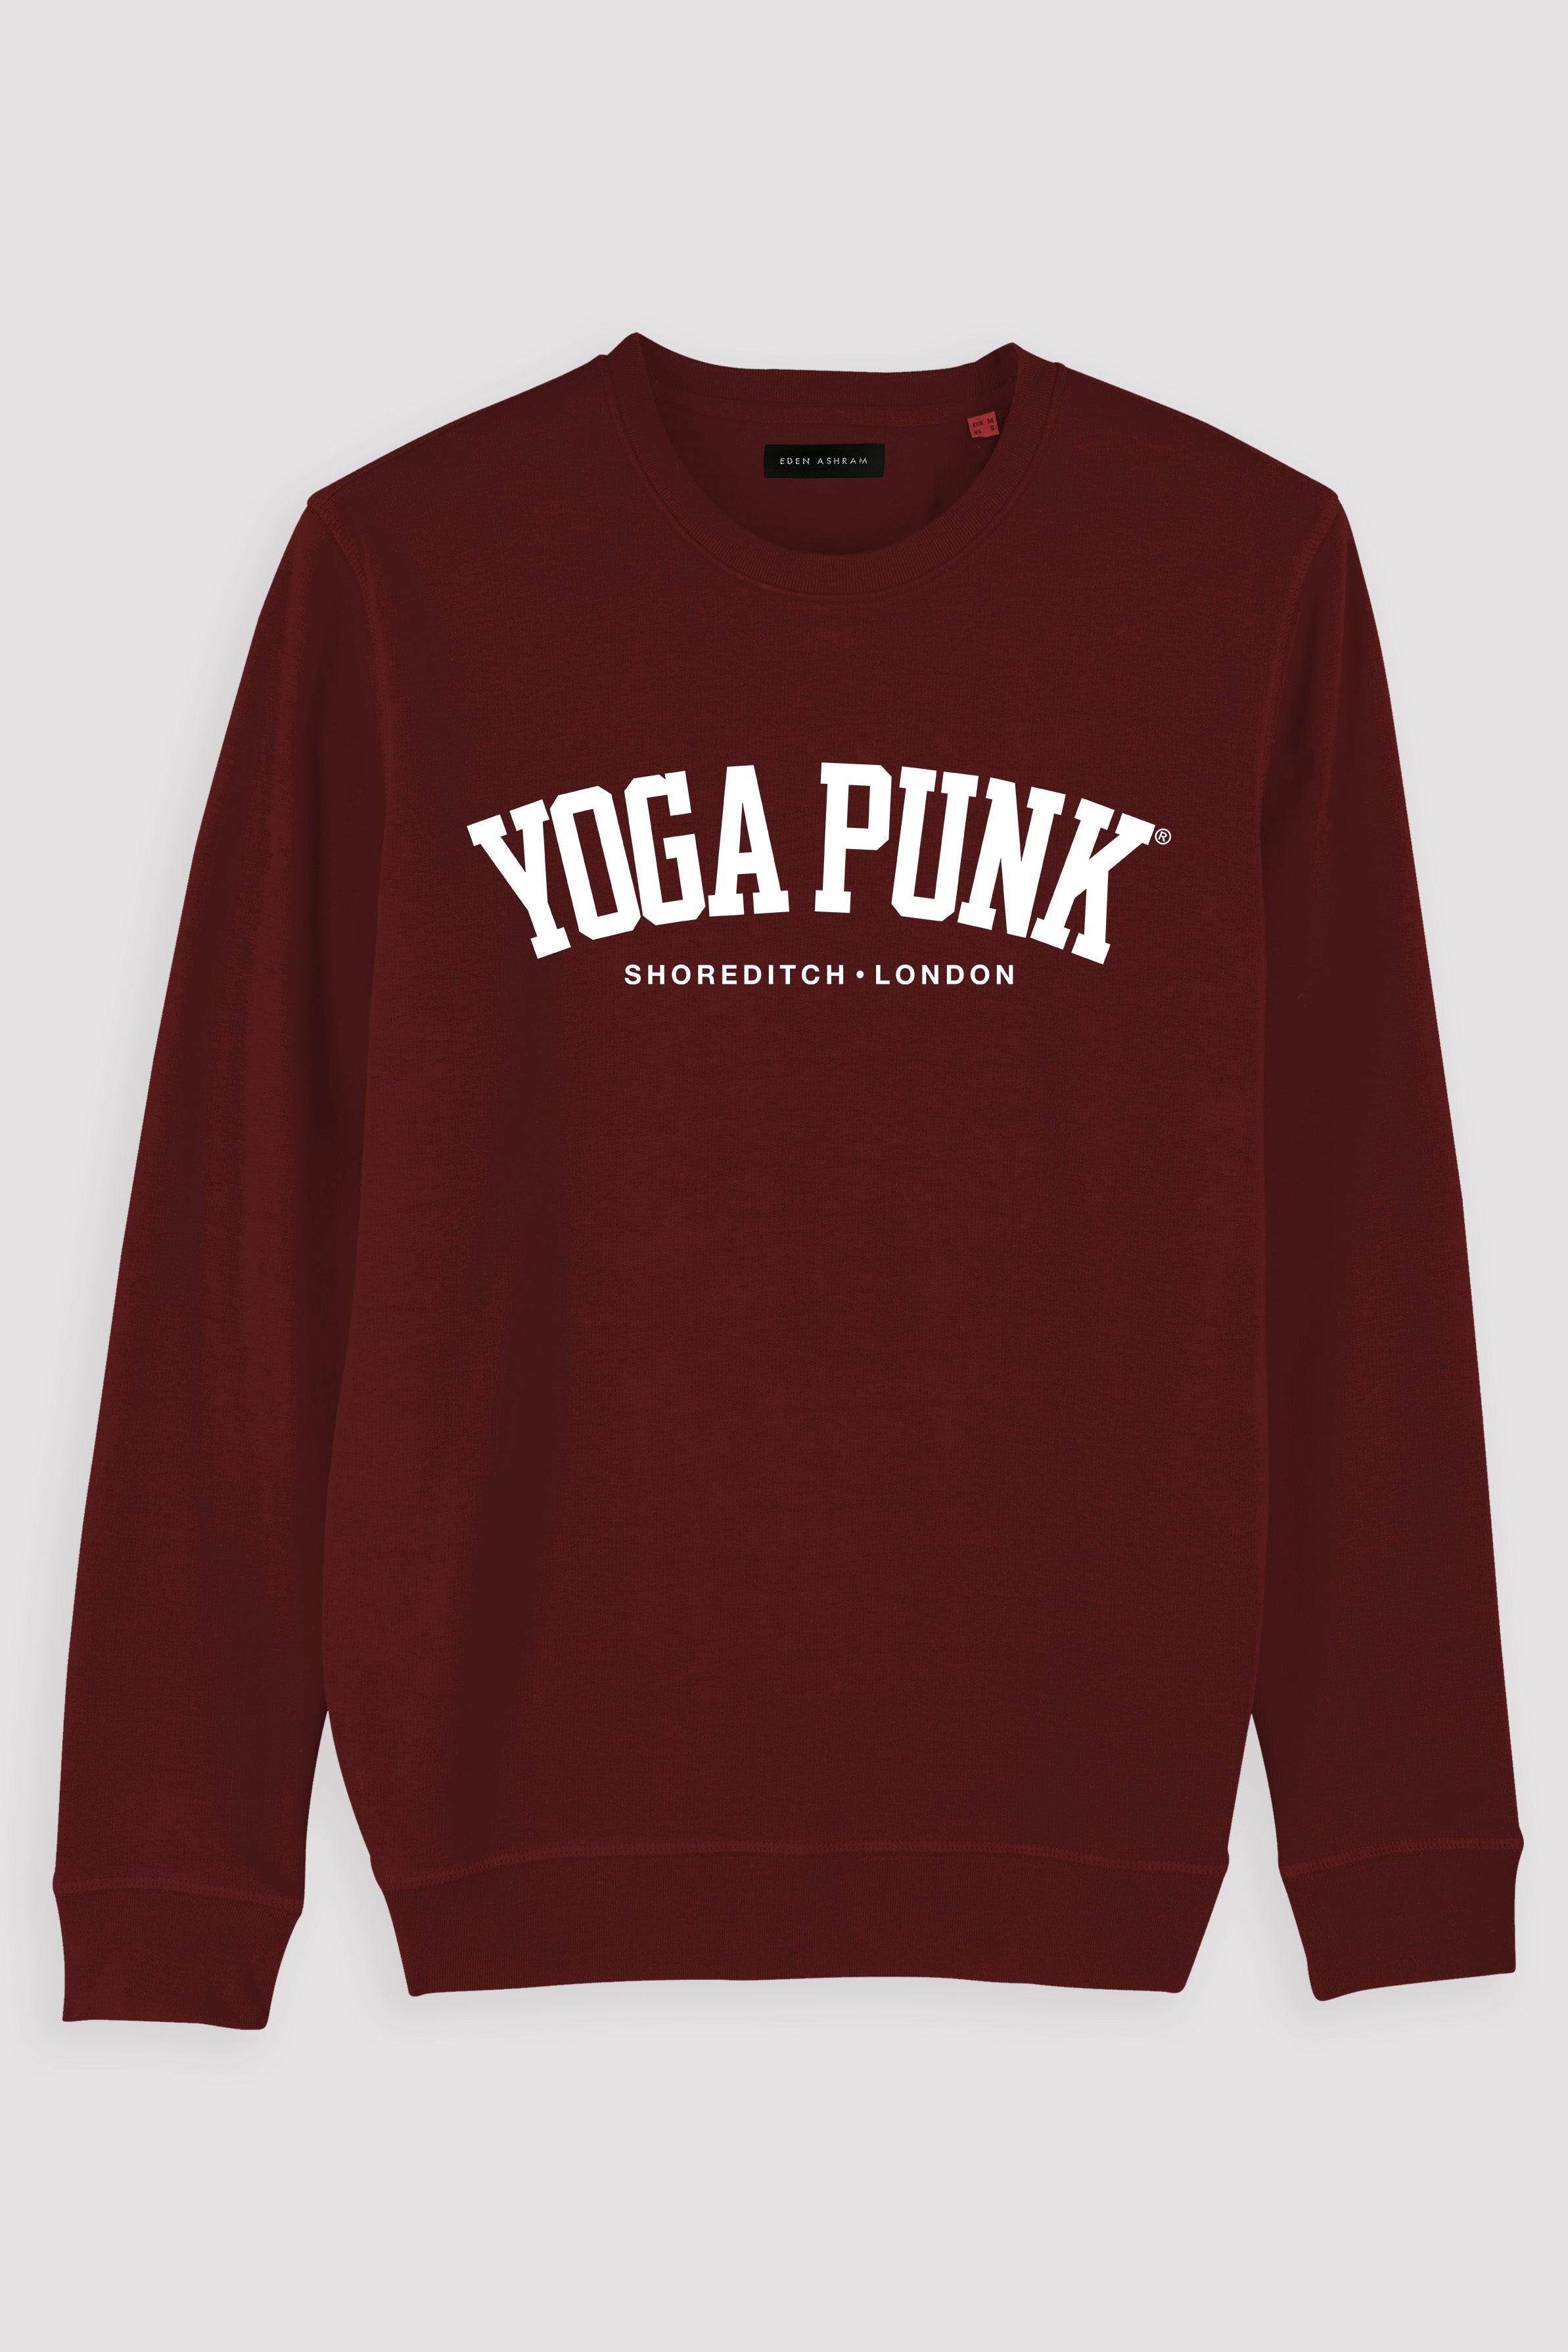 EDEN ASHRAM Yoga Punk Premium Crew Neck Sweatshirt Burgundy